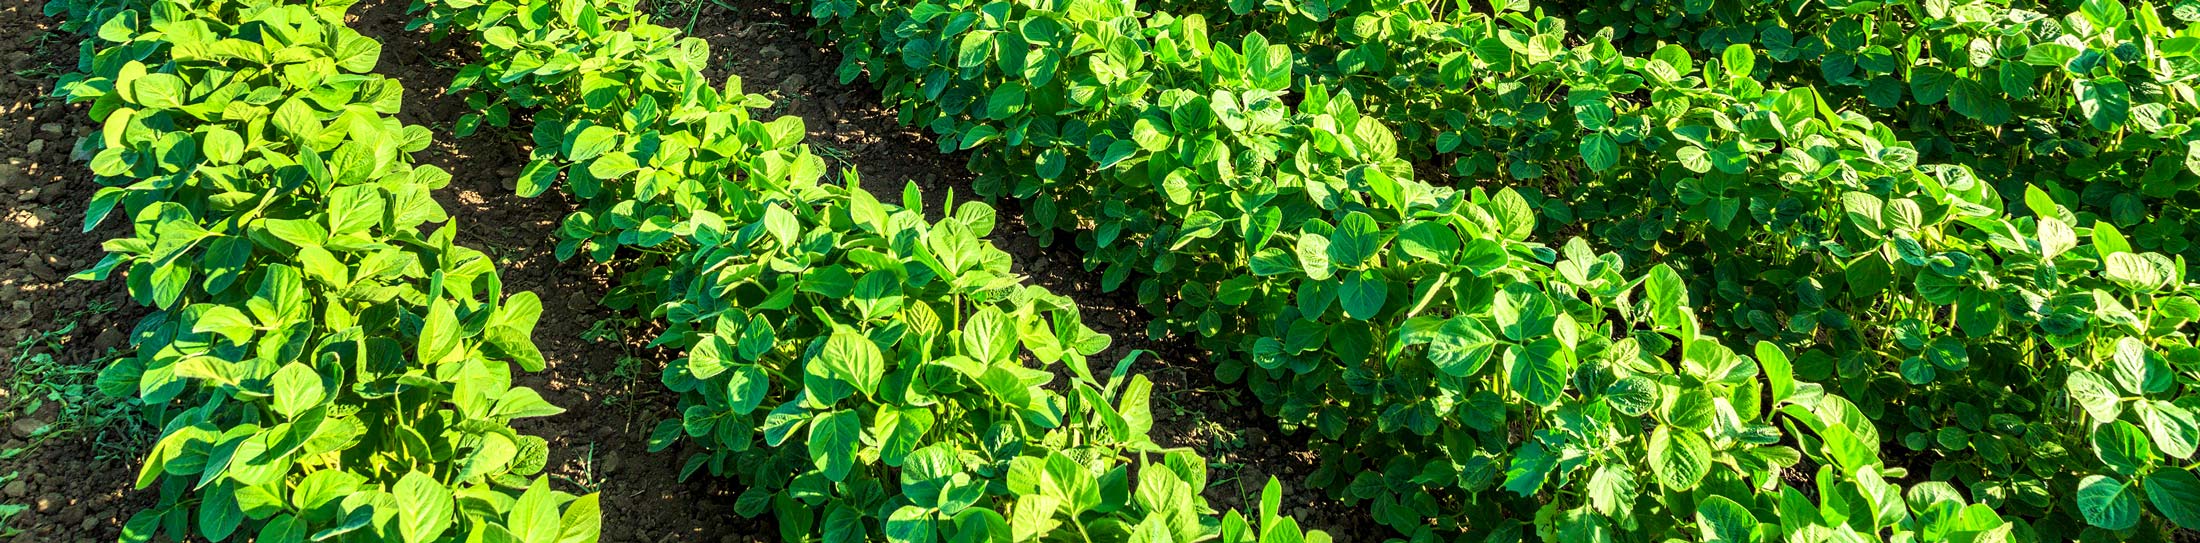 Green-soybean-plant-fertilizer